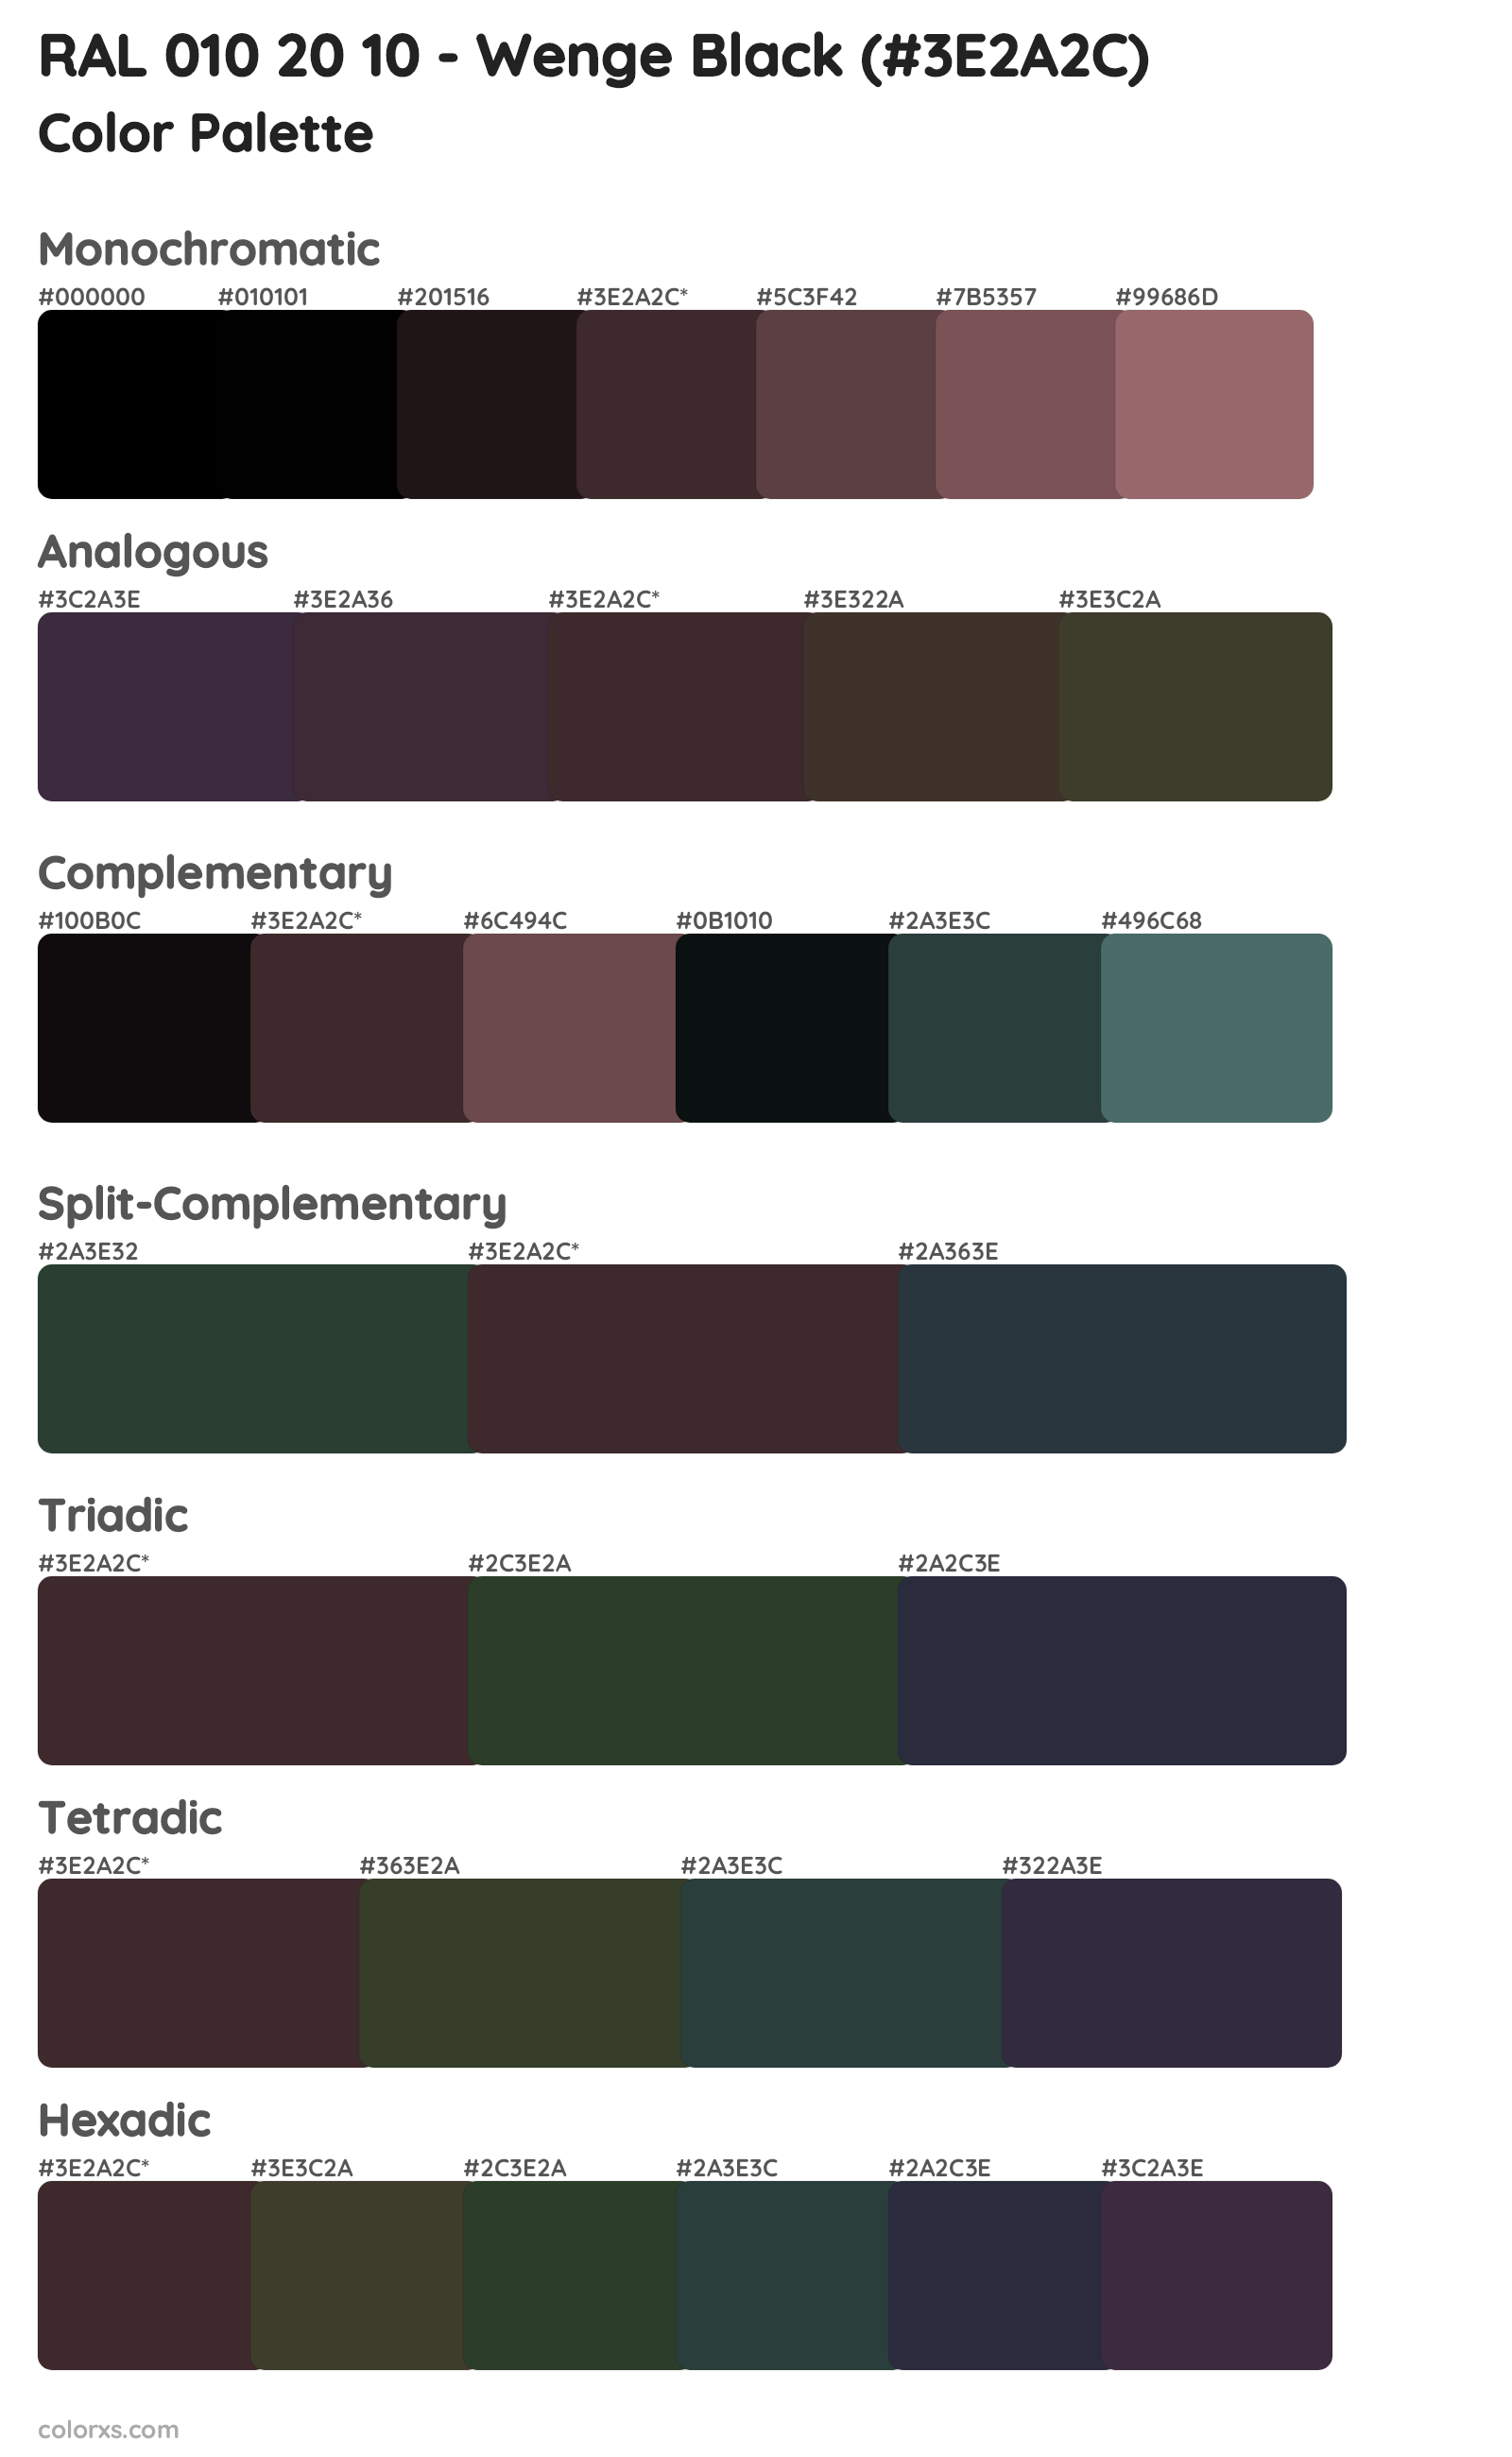 RAL 010 20 10 - Wenge Black Color Scheme Palettes